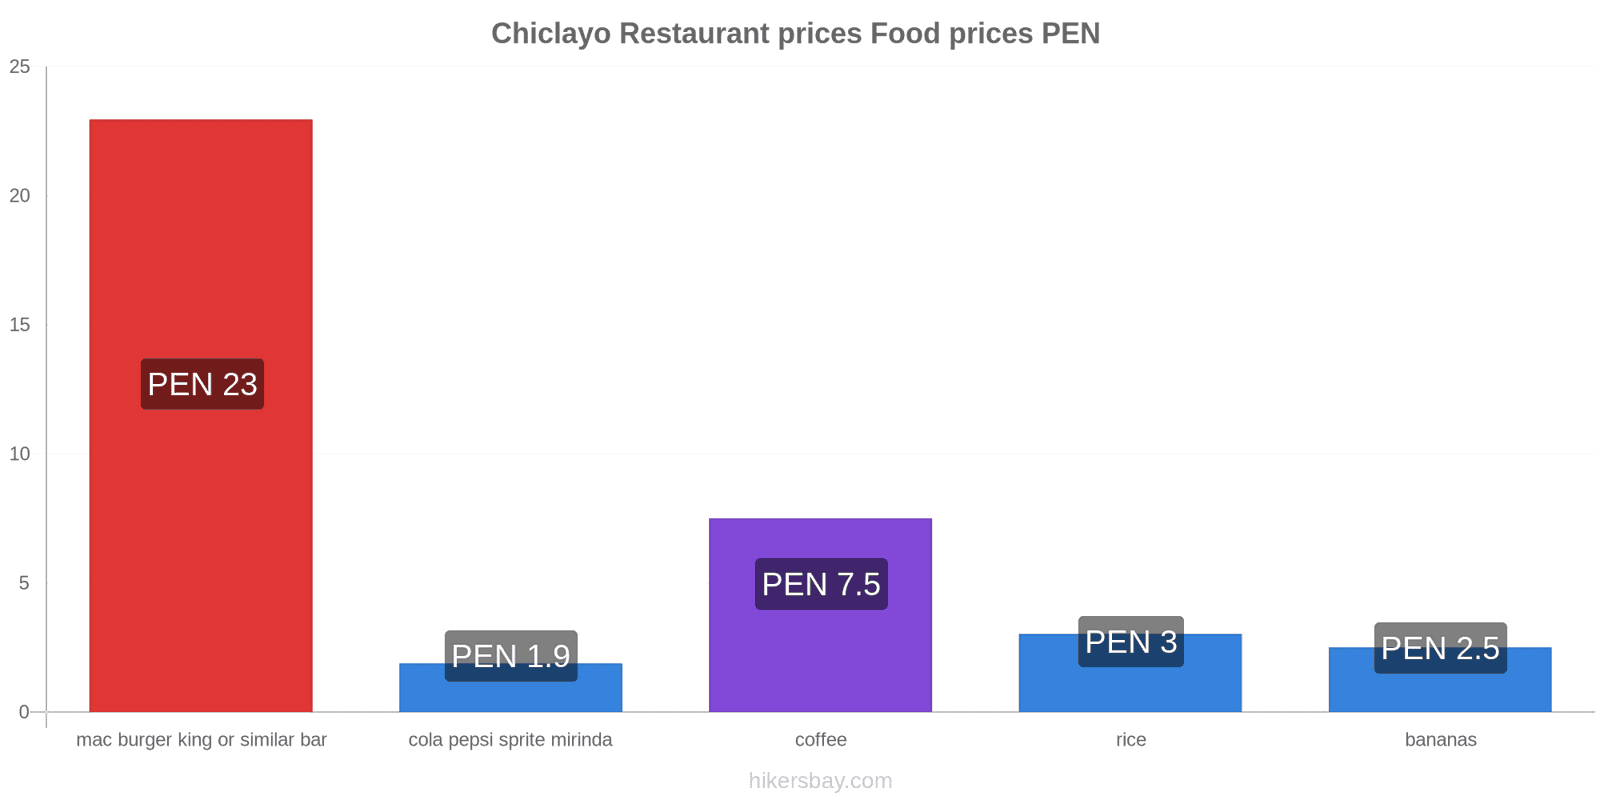 Chiclayo price changes hikersbay.com